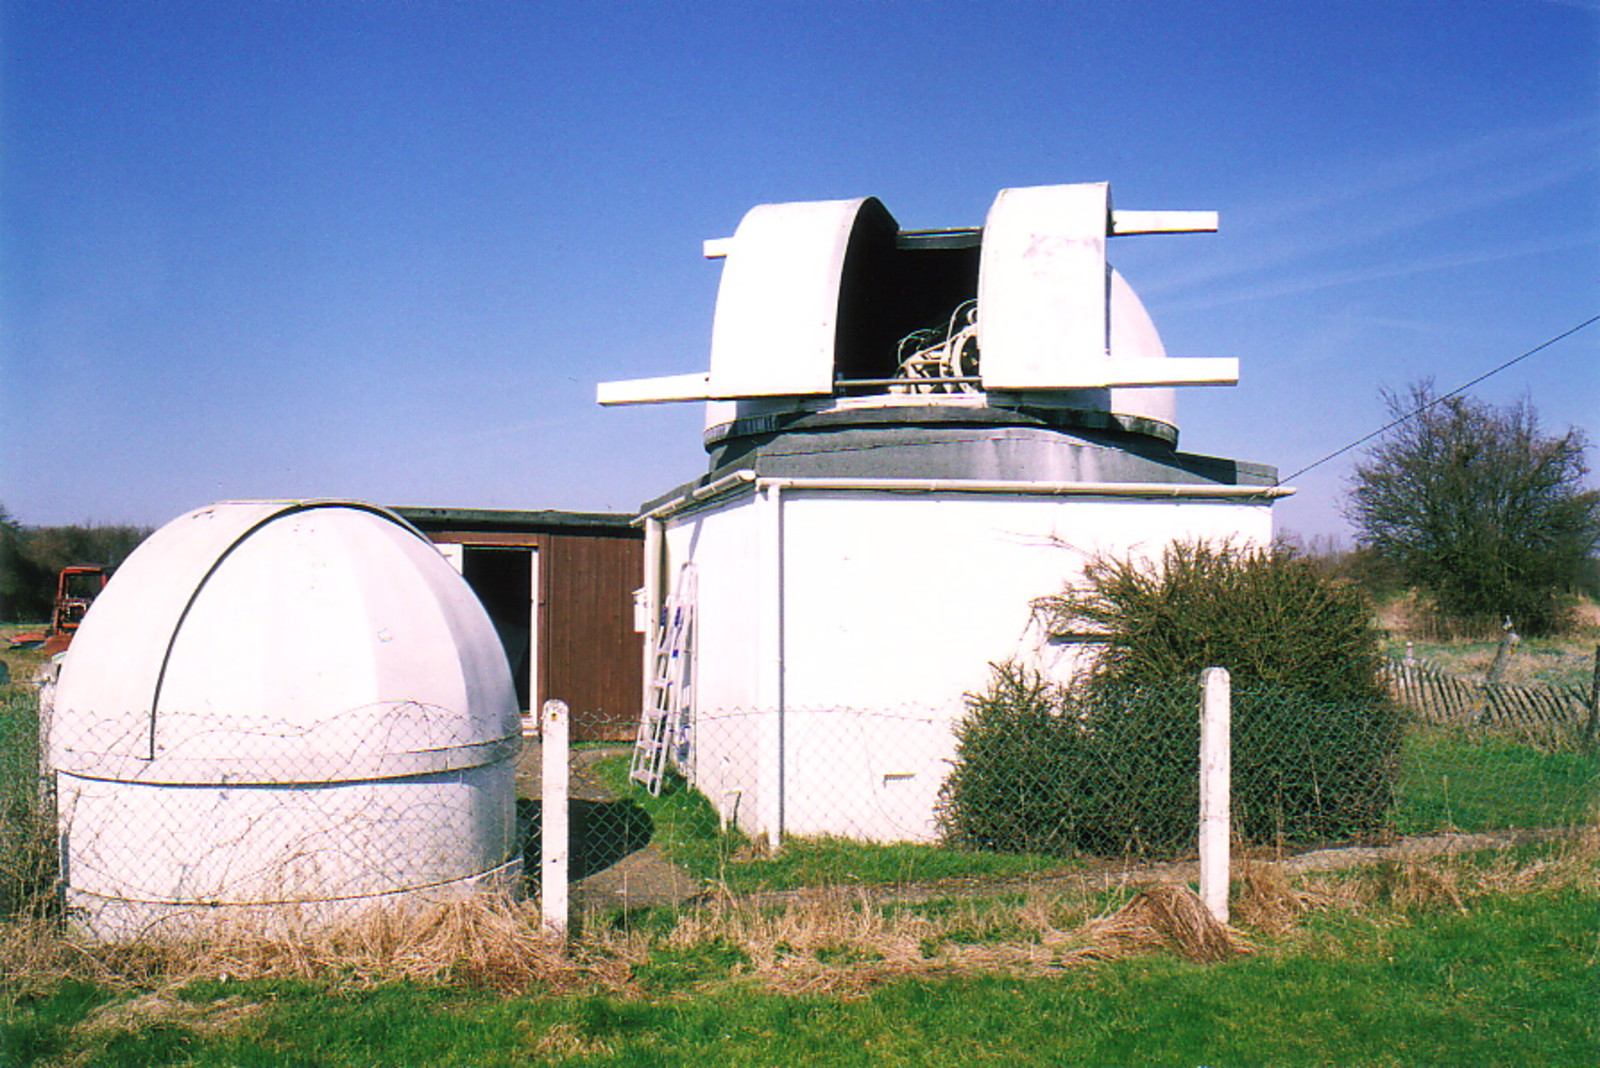 Croydon Astronomy Society's telescope